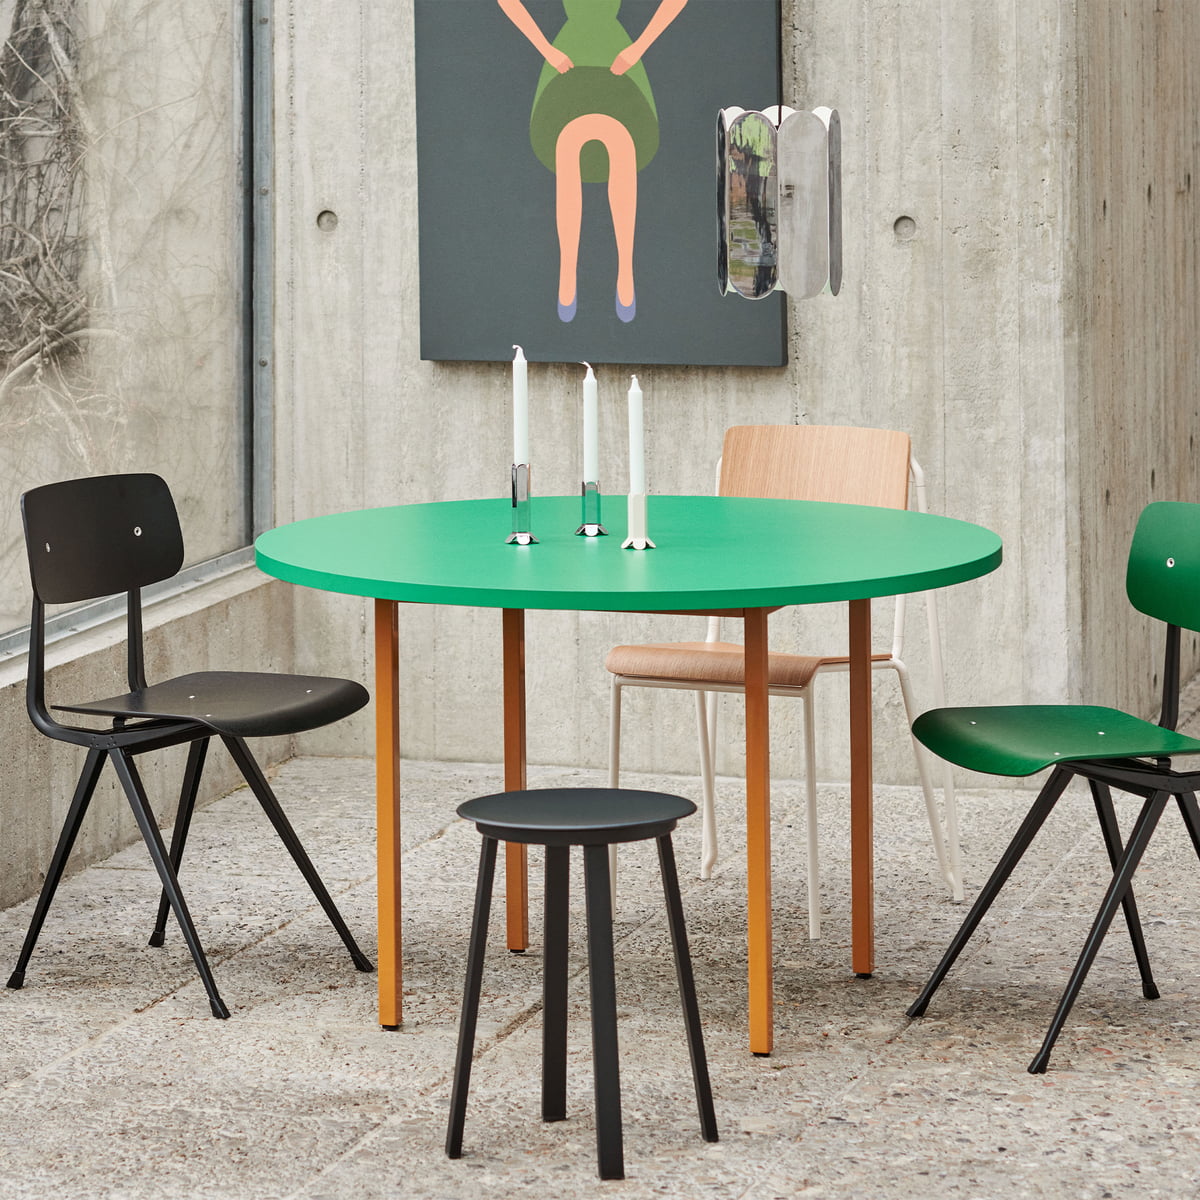 Briljant Kwijtschelding Bek Hay - Two-Colour Dining table round | Connox